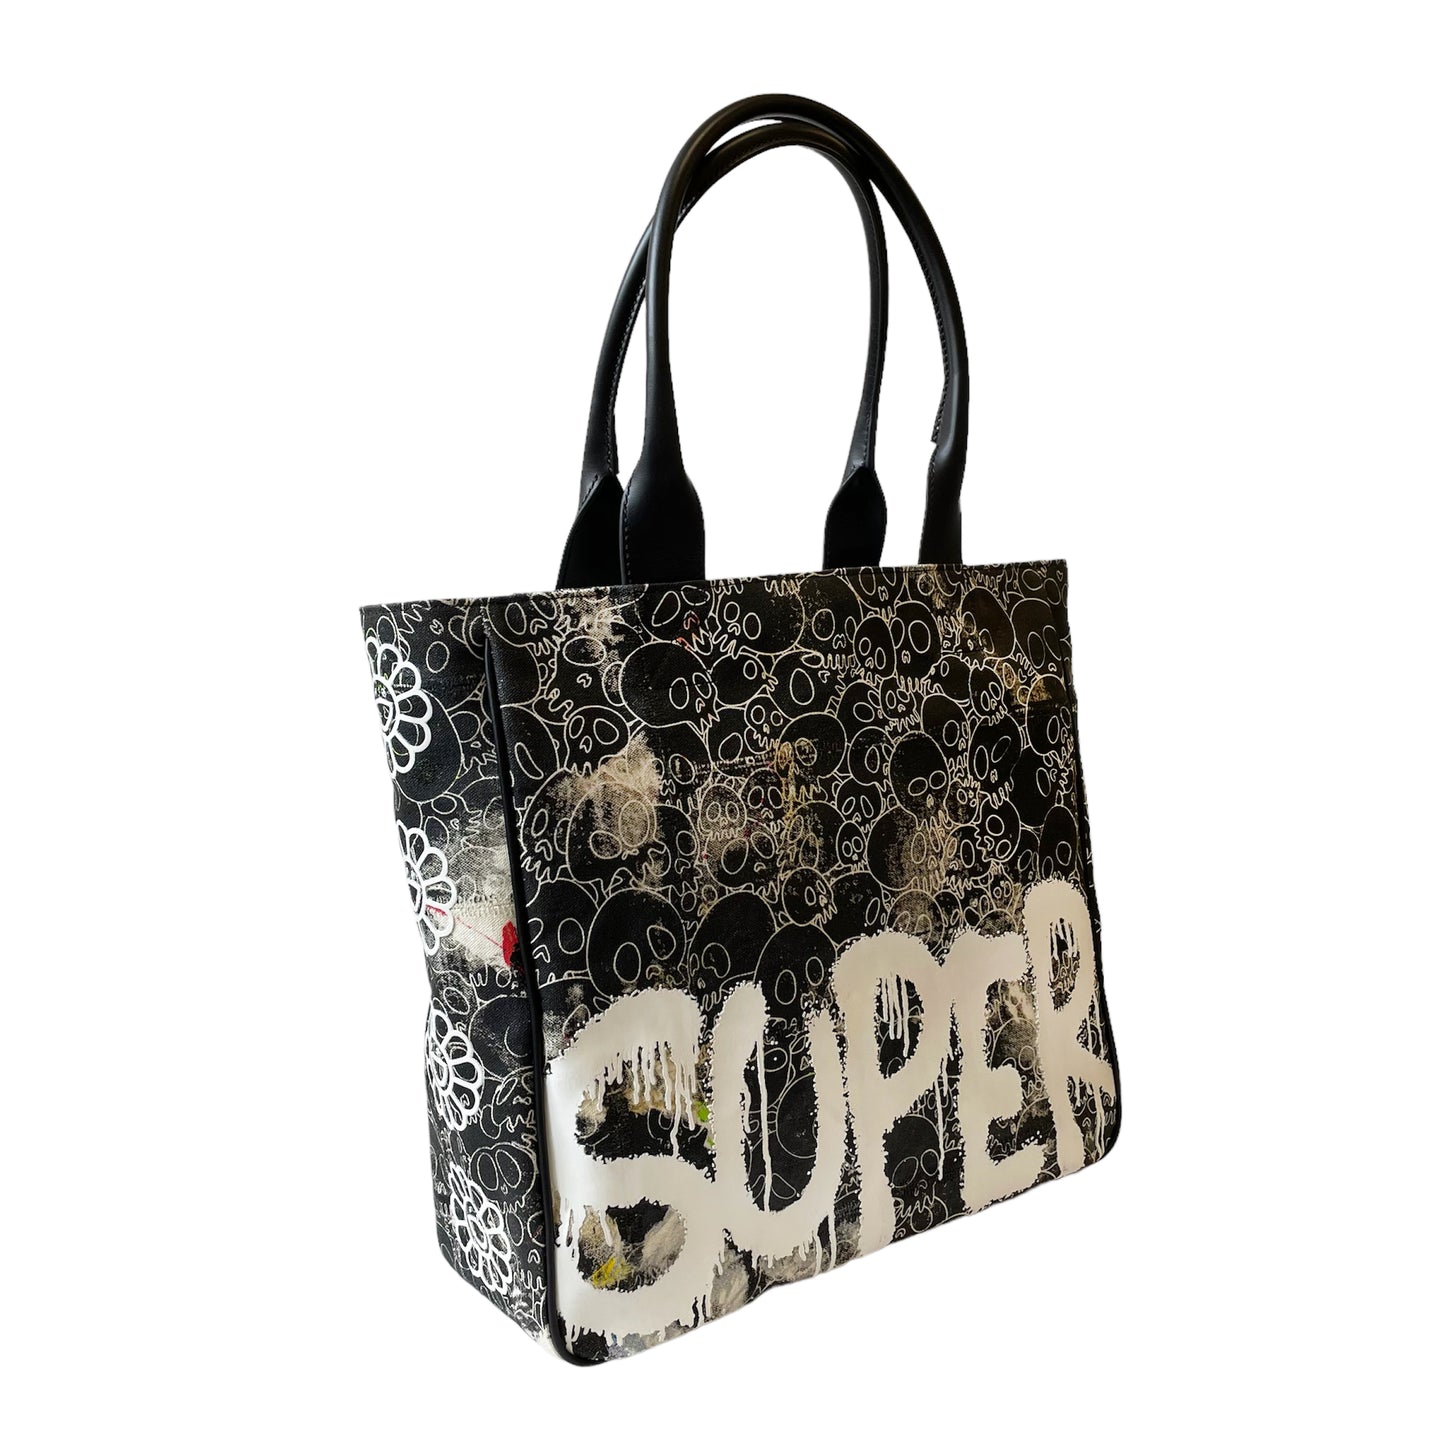 Takashi Murakami Tote Bag - SUPER/HOLLOW